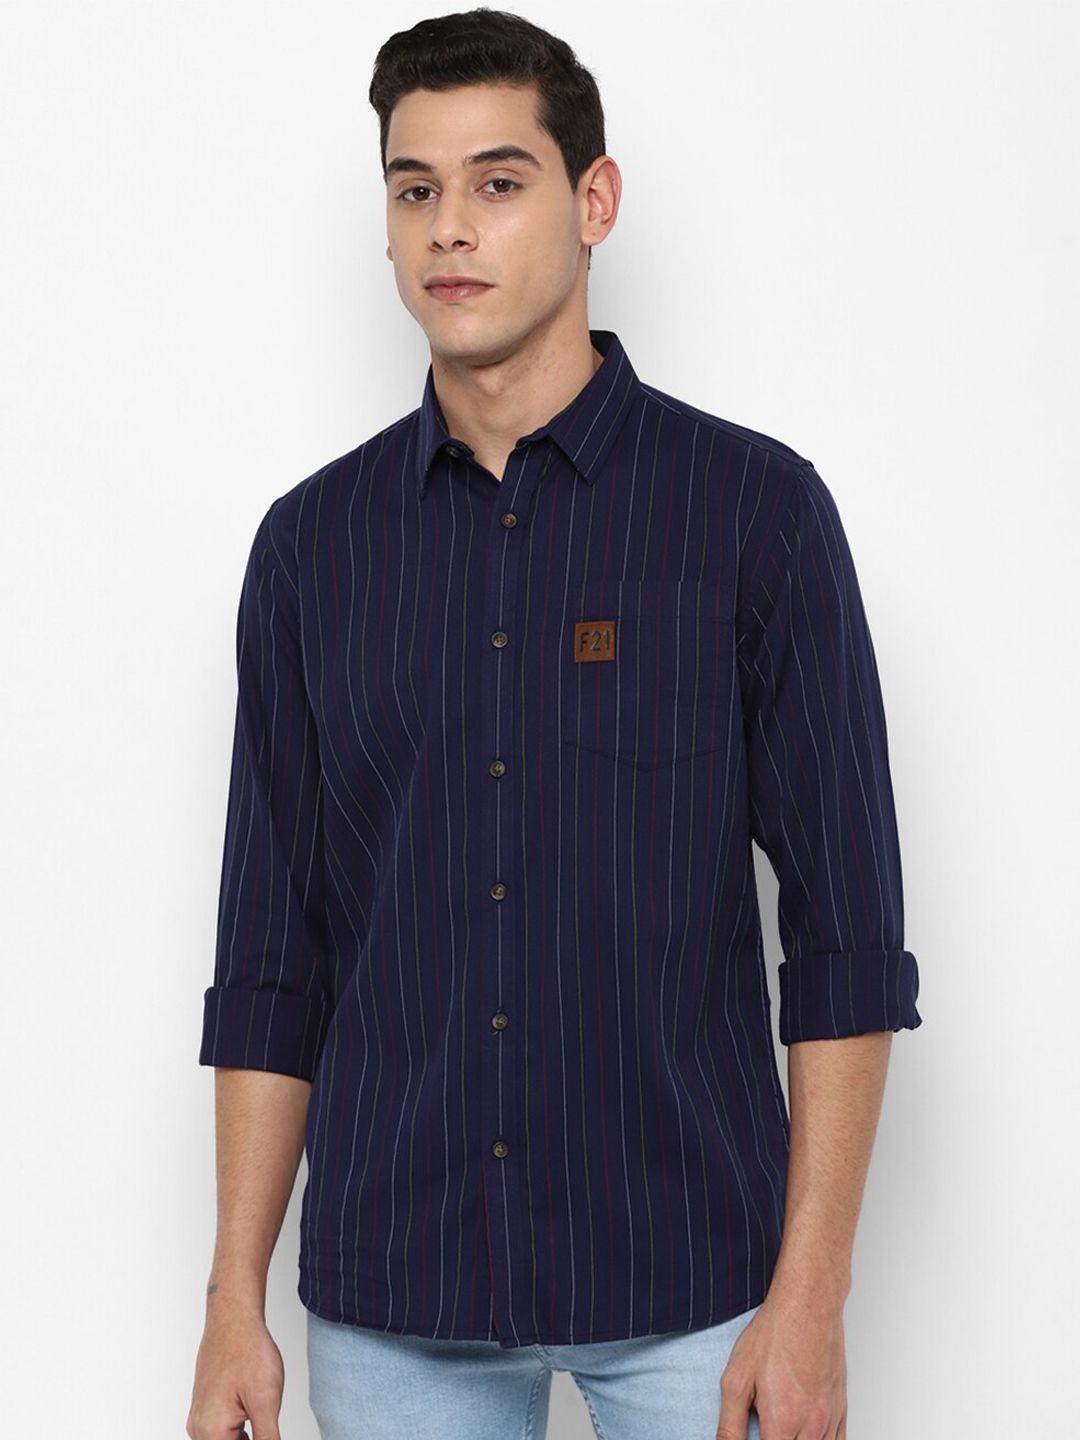 forever-21-men-navy-blue-striped-regular-fit-cotton-casual-shirt